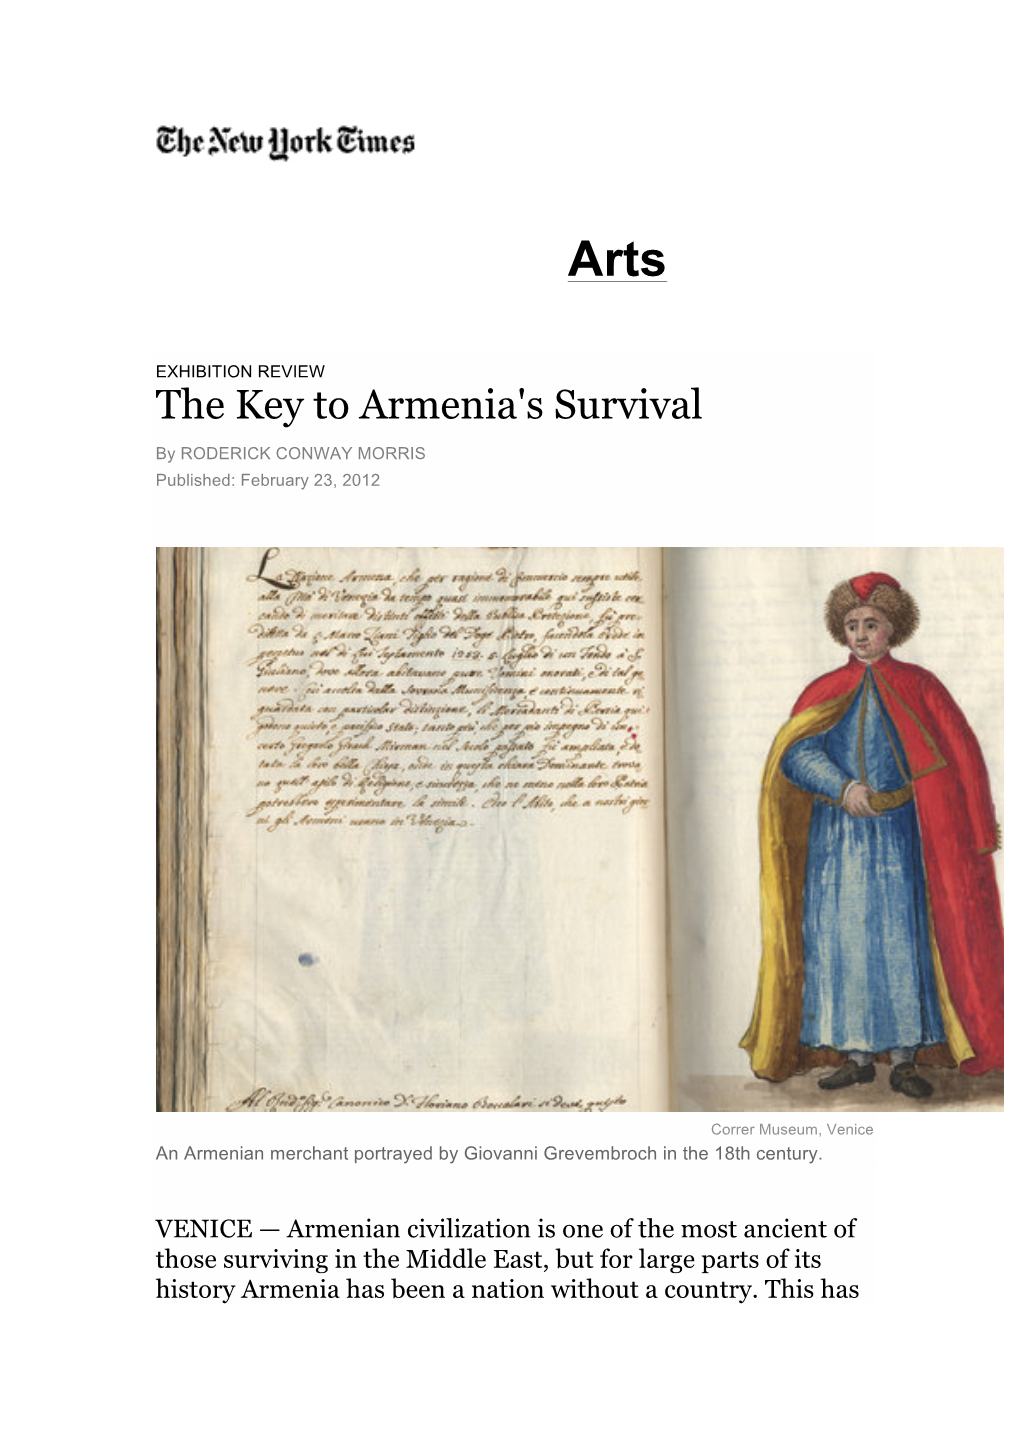 Armenia: Imprints of a Civilization. Correr Museum, Venice.Through April 10